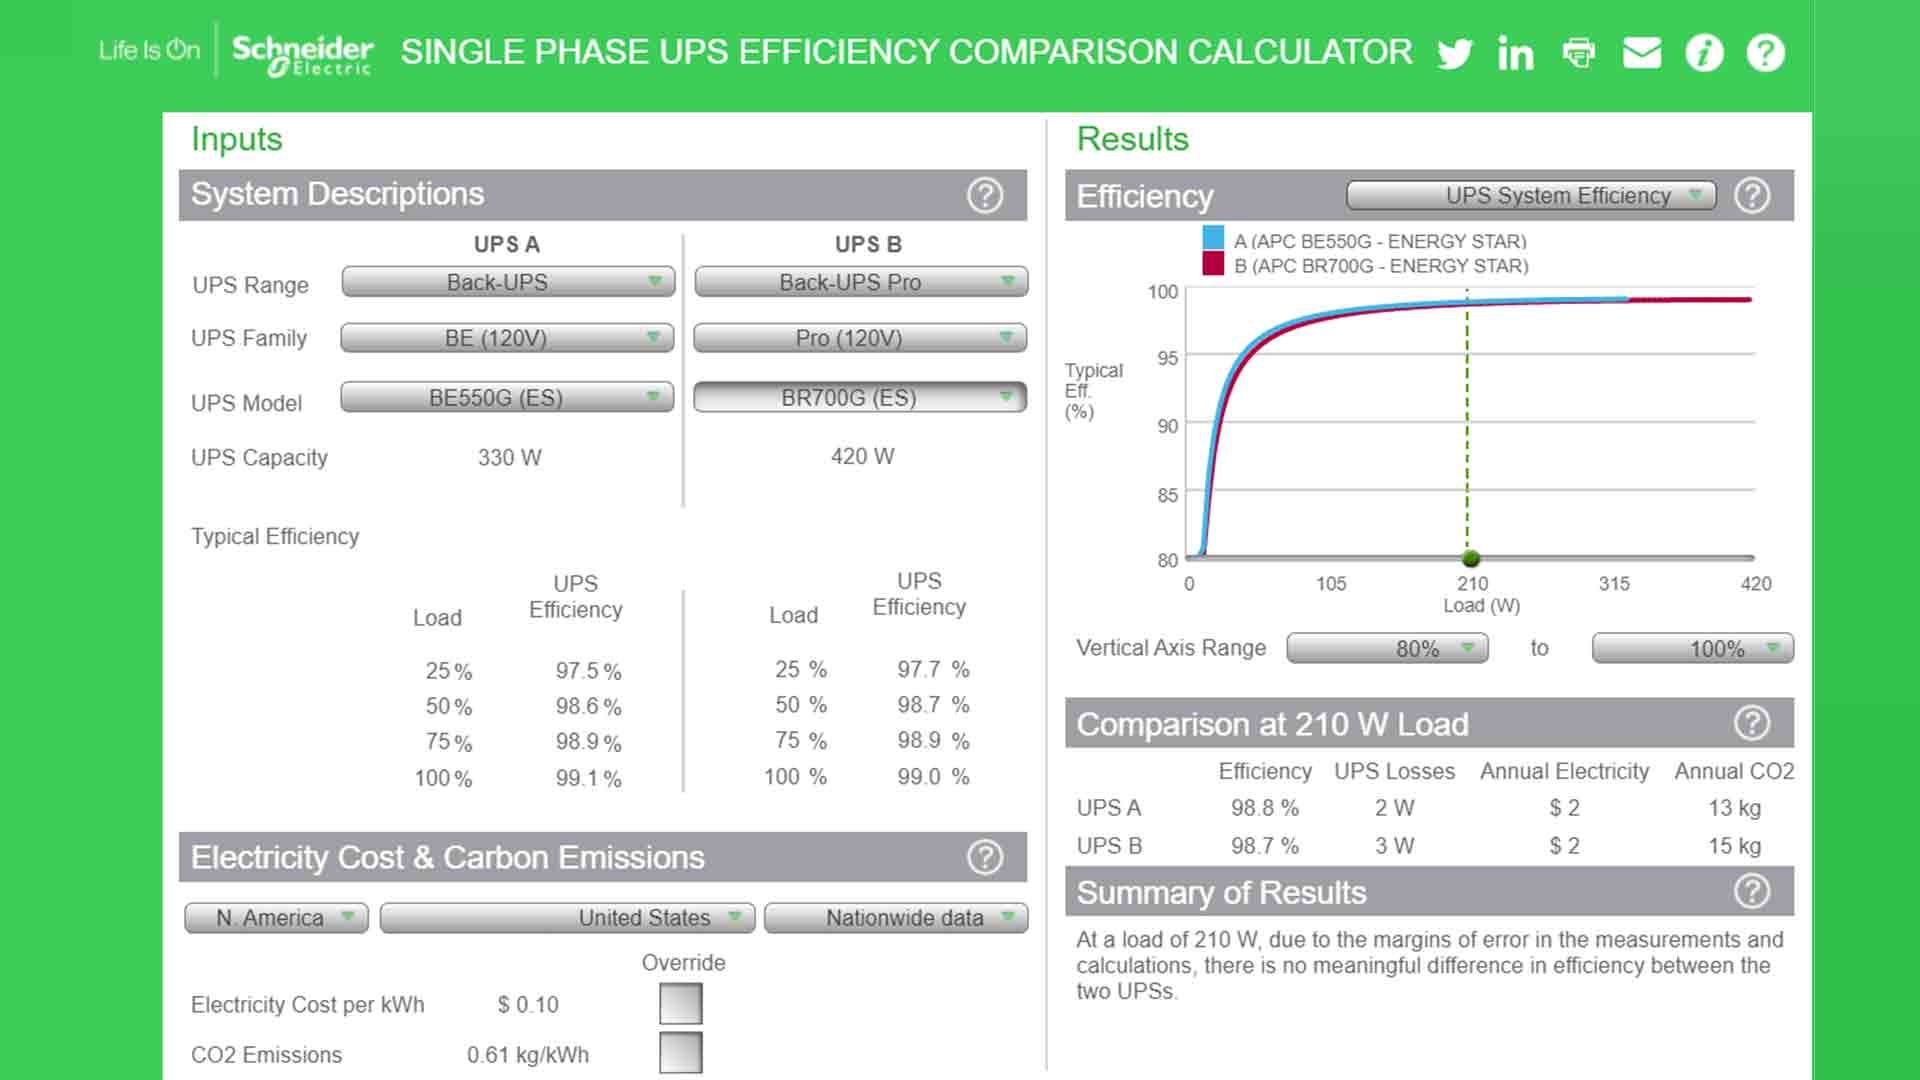 Single Phase UPS Efficiency Comparison Calculator